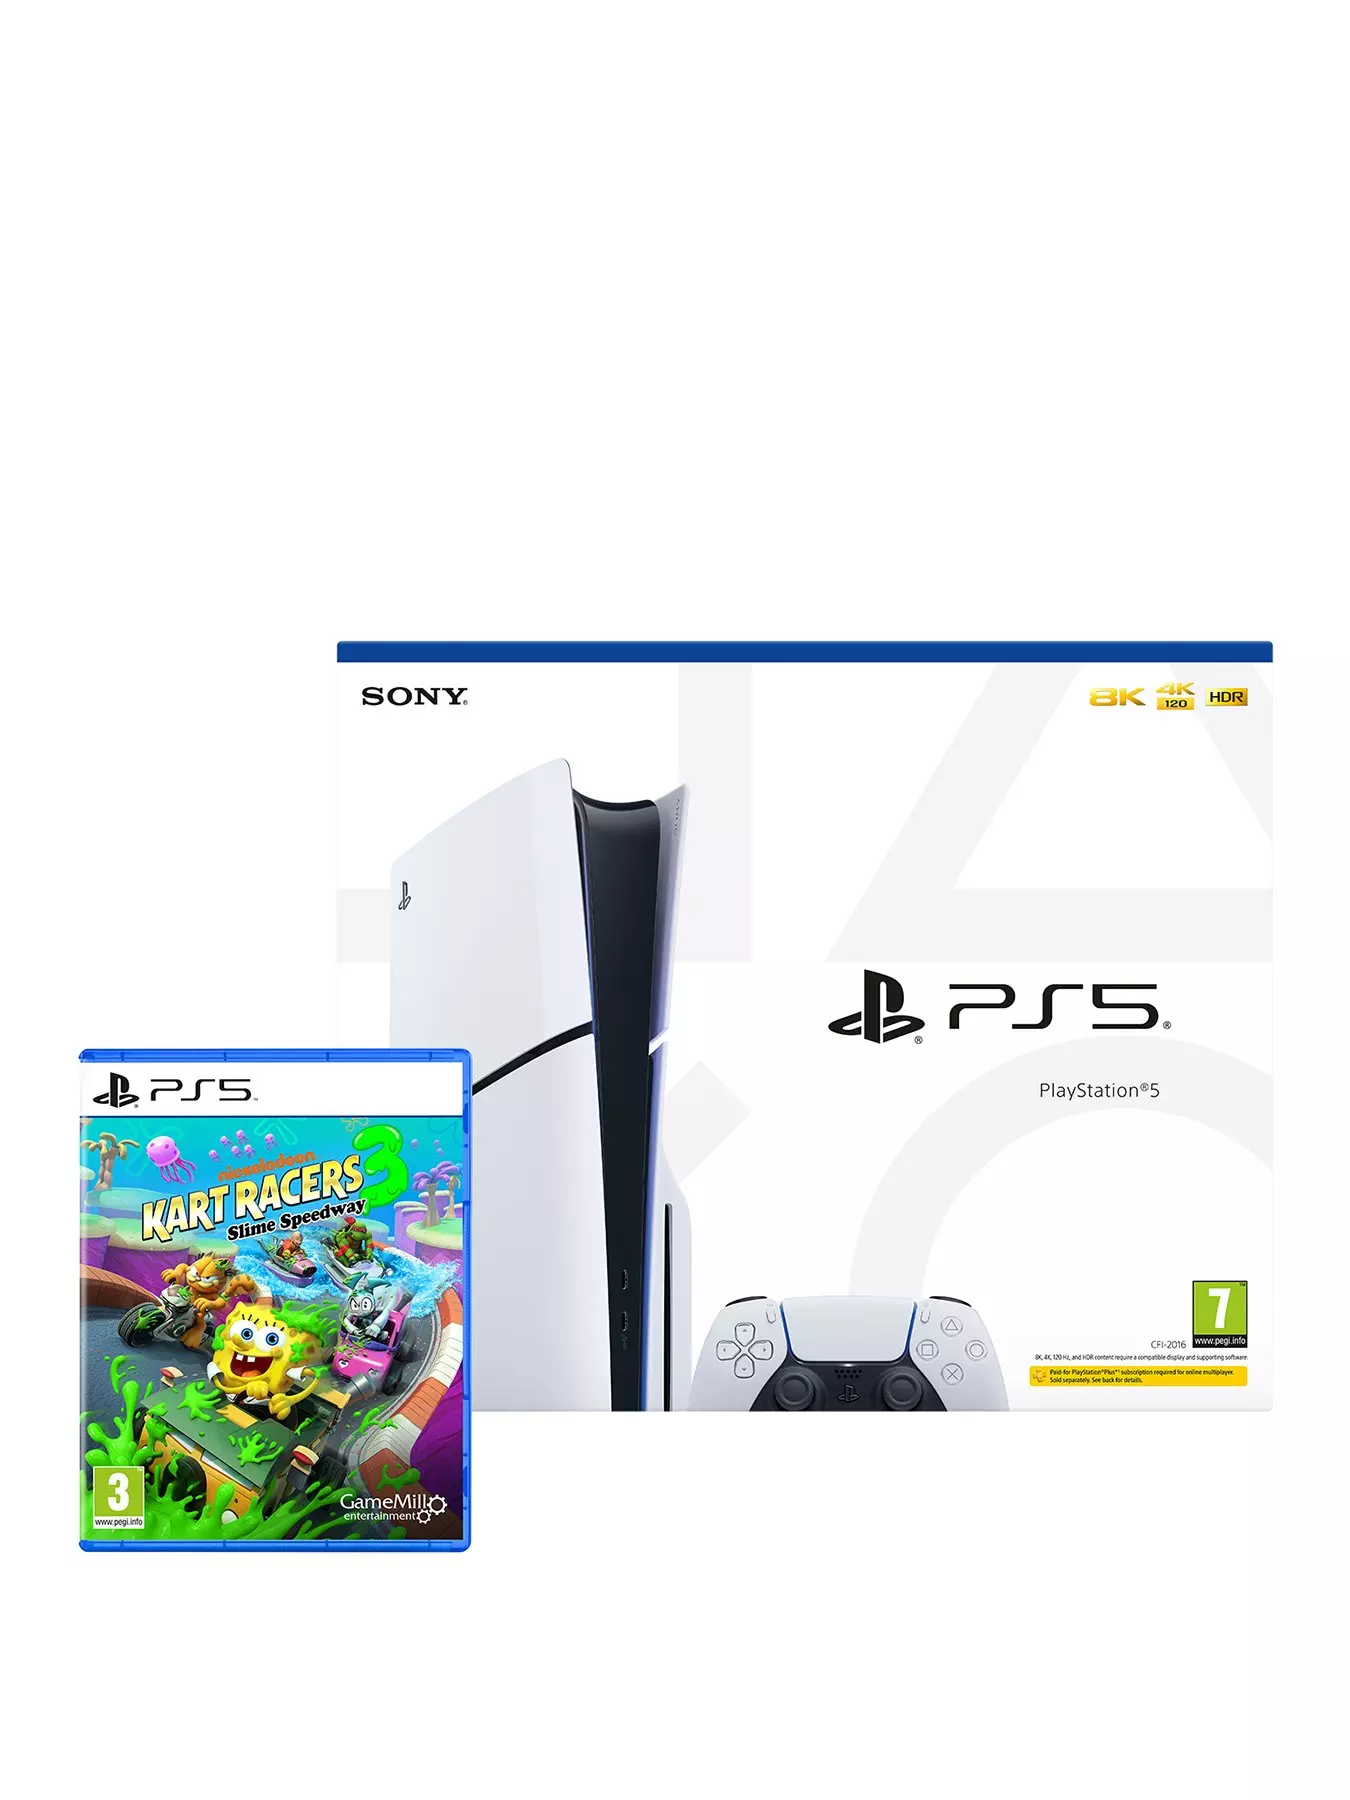 PlayStation 5 Slim Consoles, PS5 Disc & Digital Edition